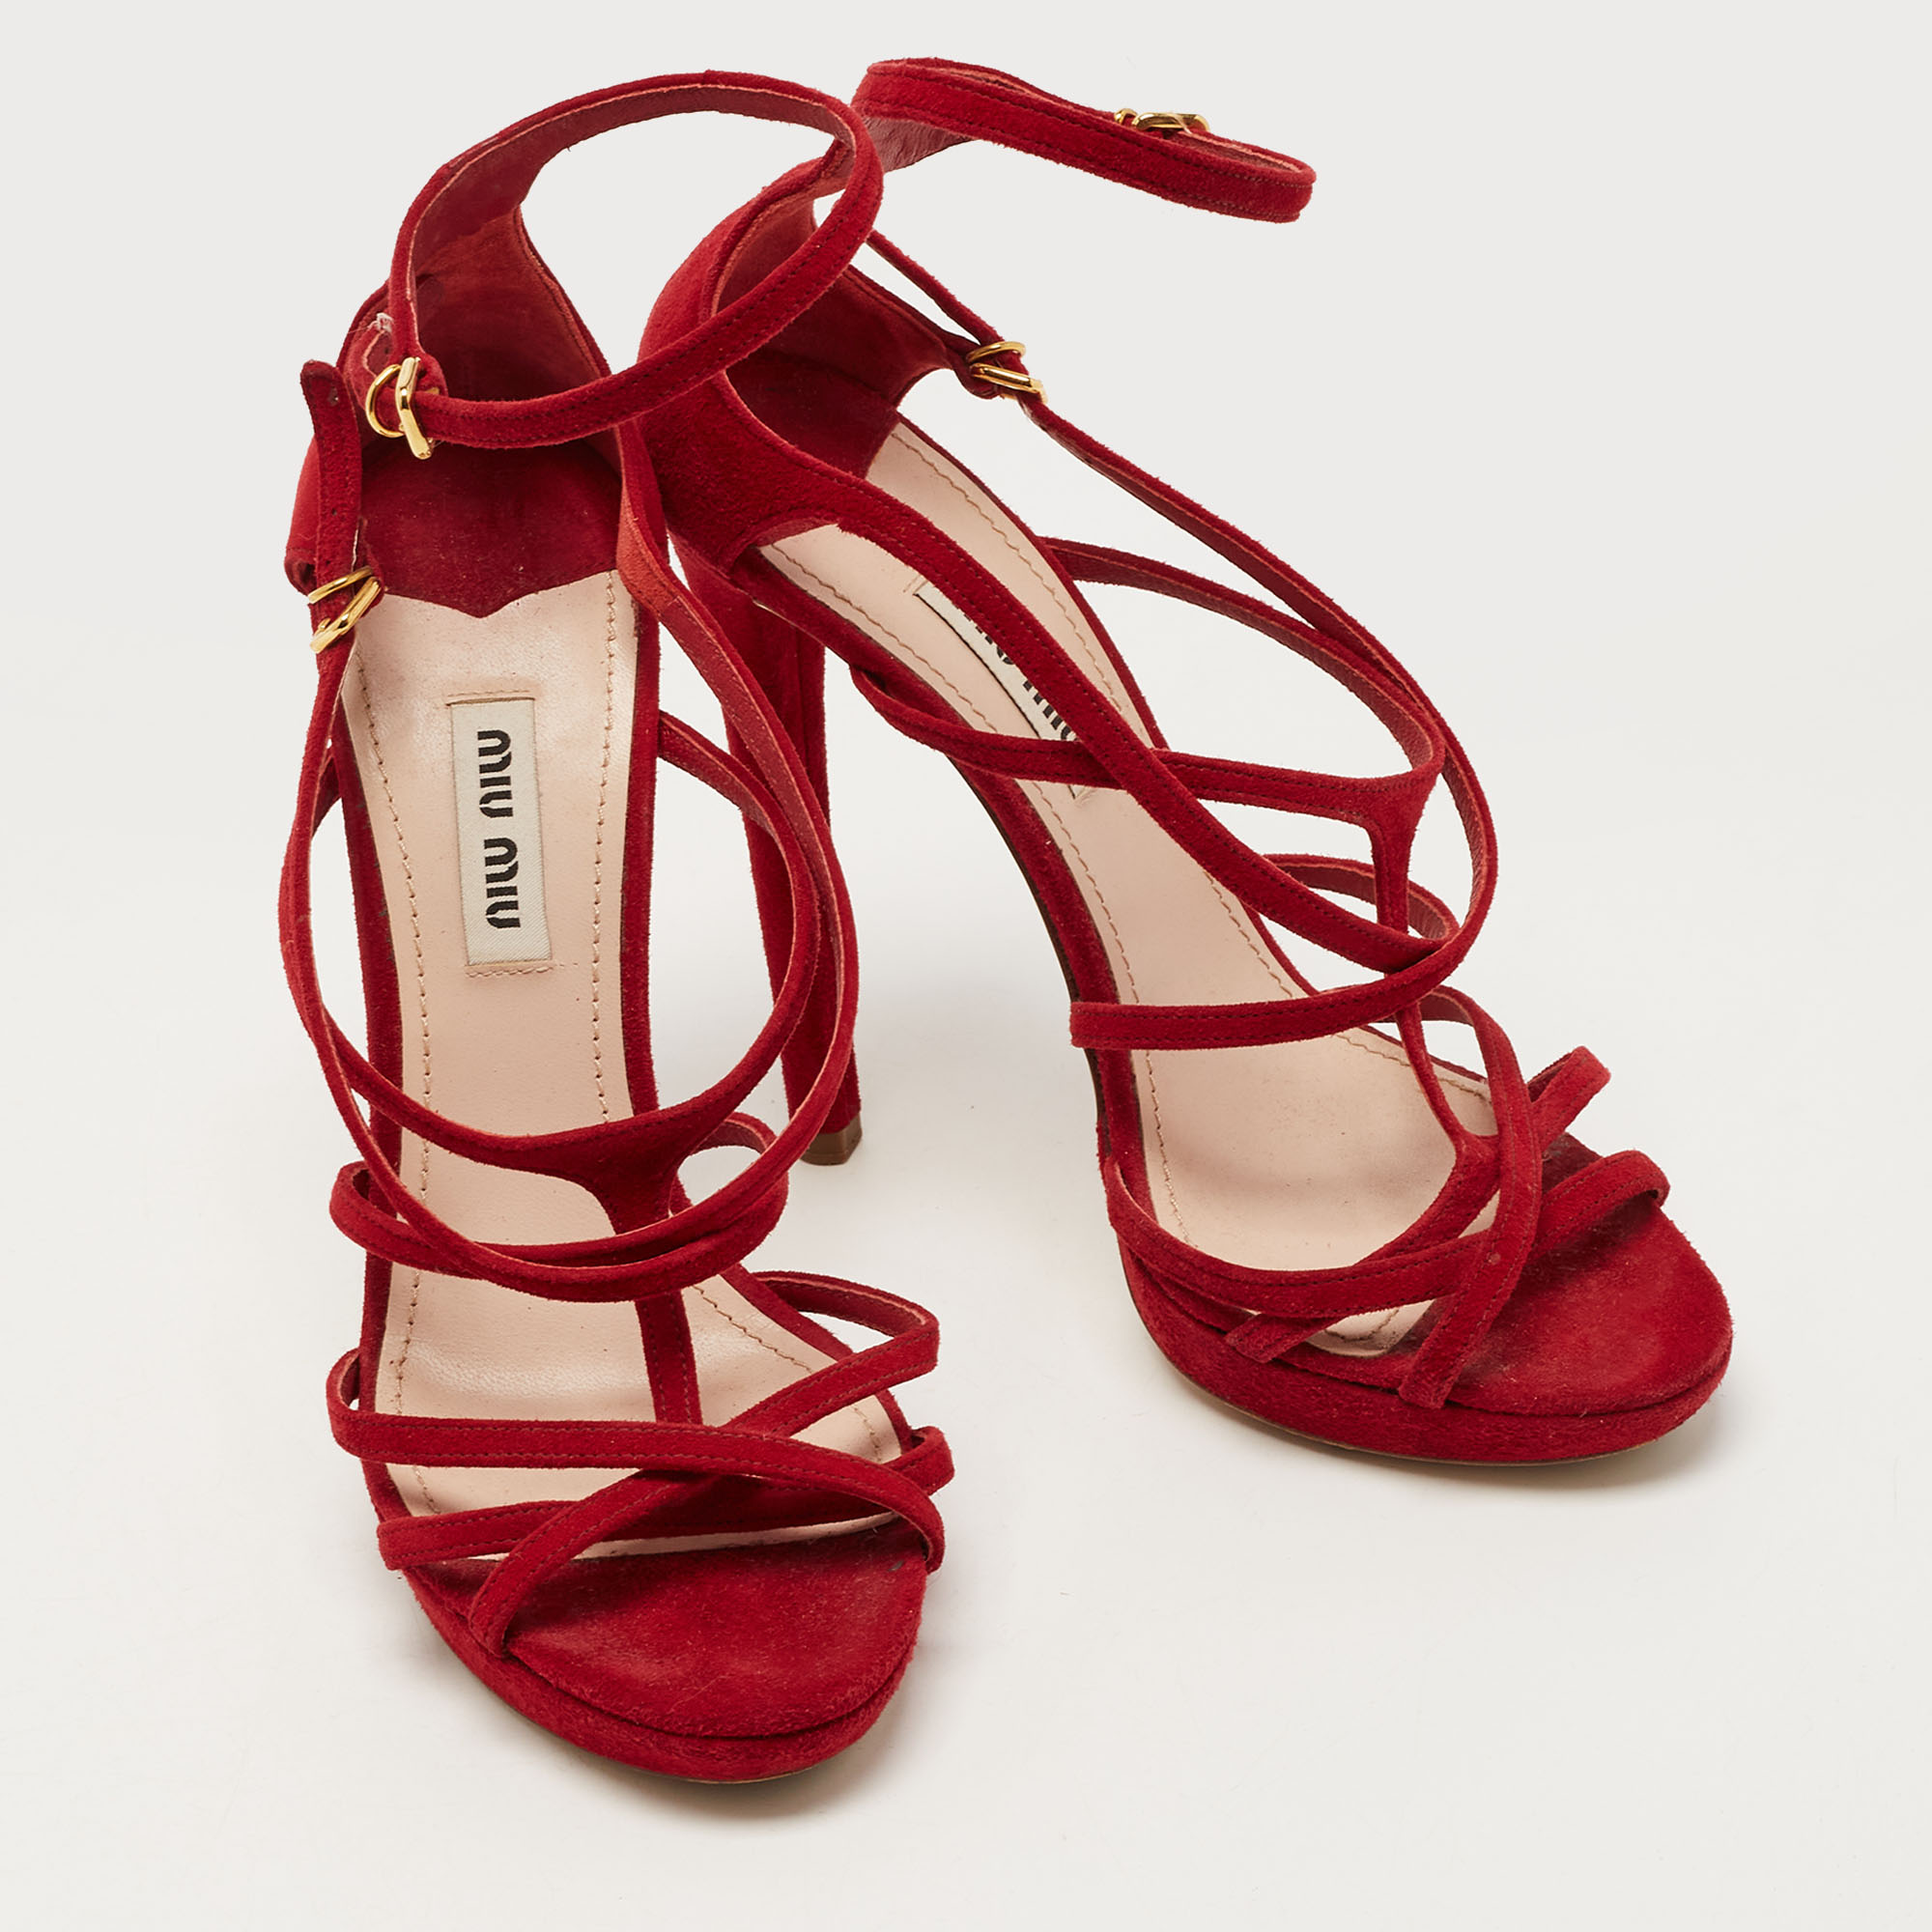 Miu Miu Red Suede Strappy Platform Sandals Size 36